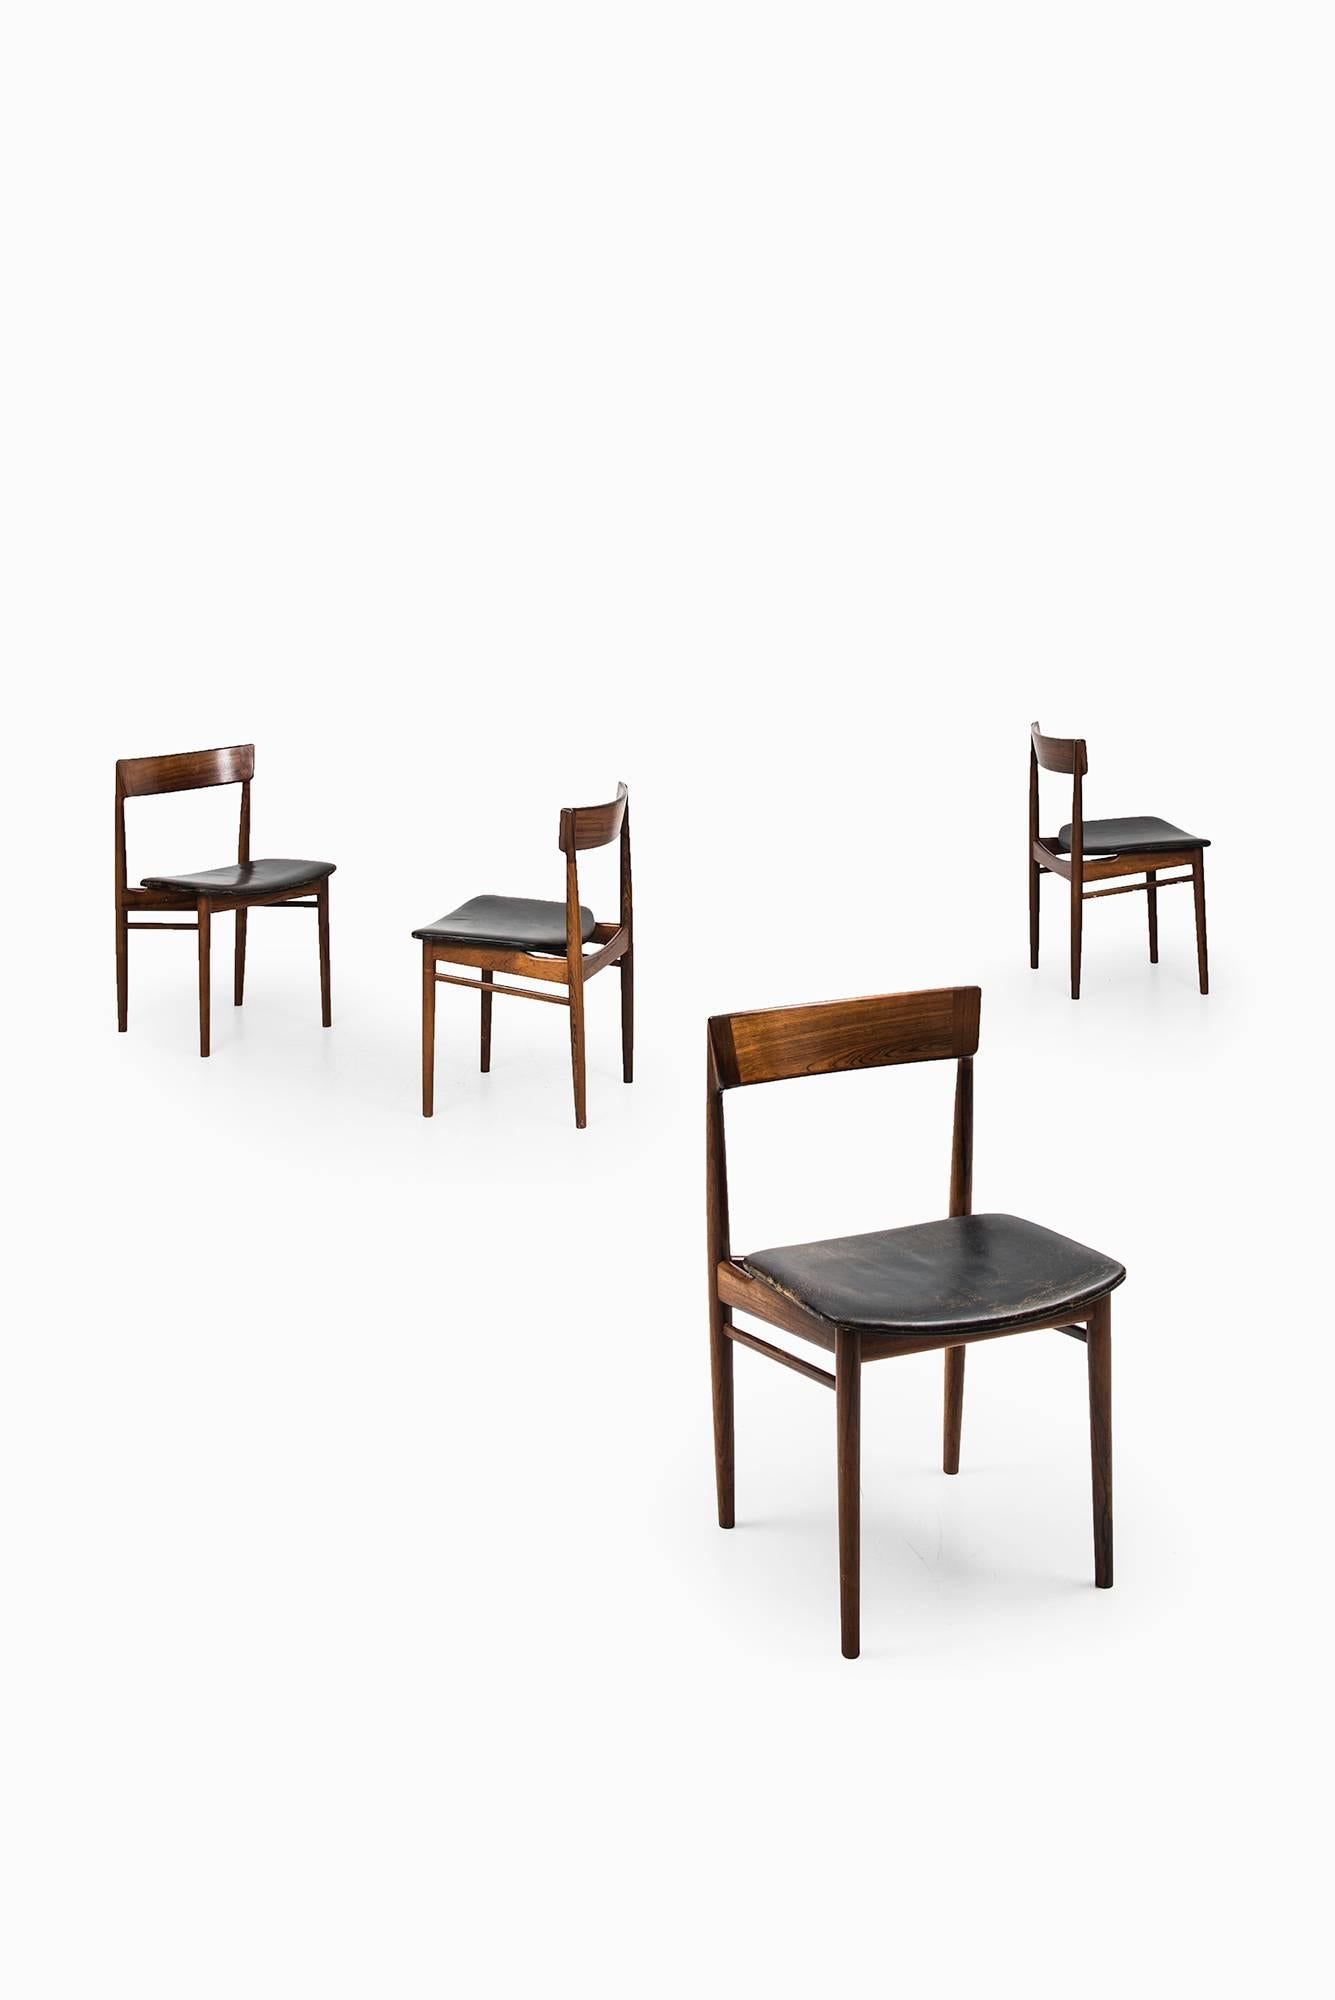 Rare set of four dining chairs model 39 designed by Henry Rosengren Hansen. Produced by Brande Møbelfabrik in Denmark.